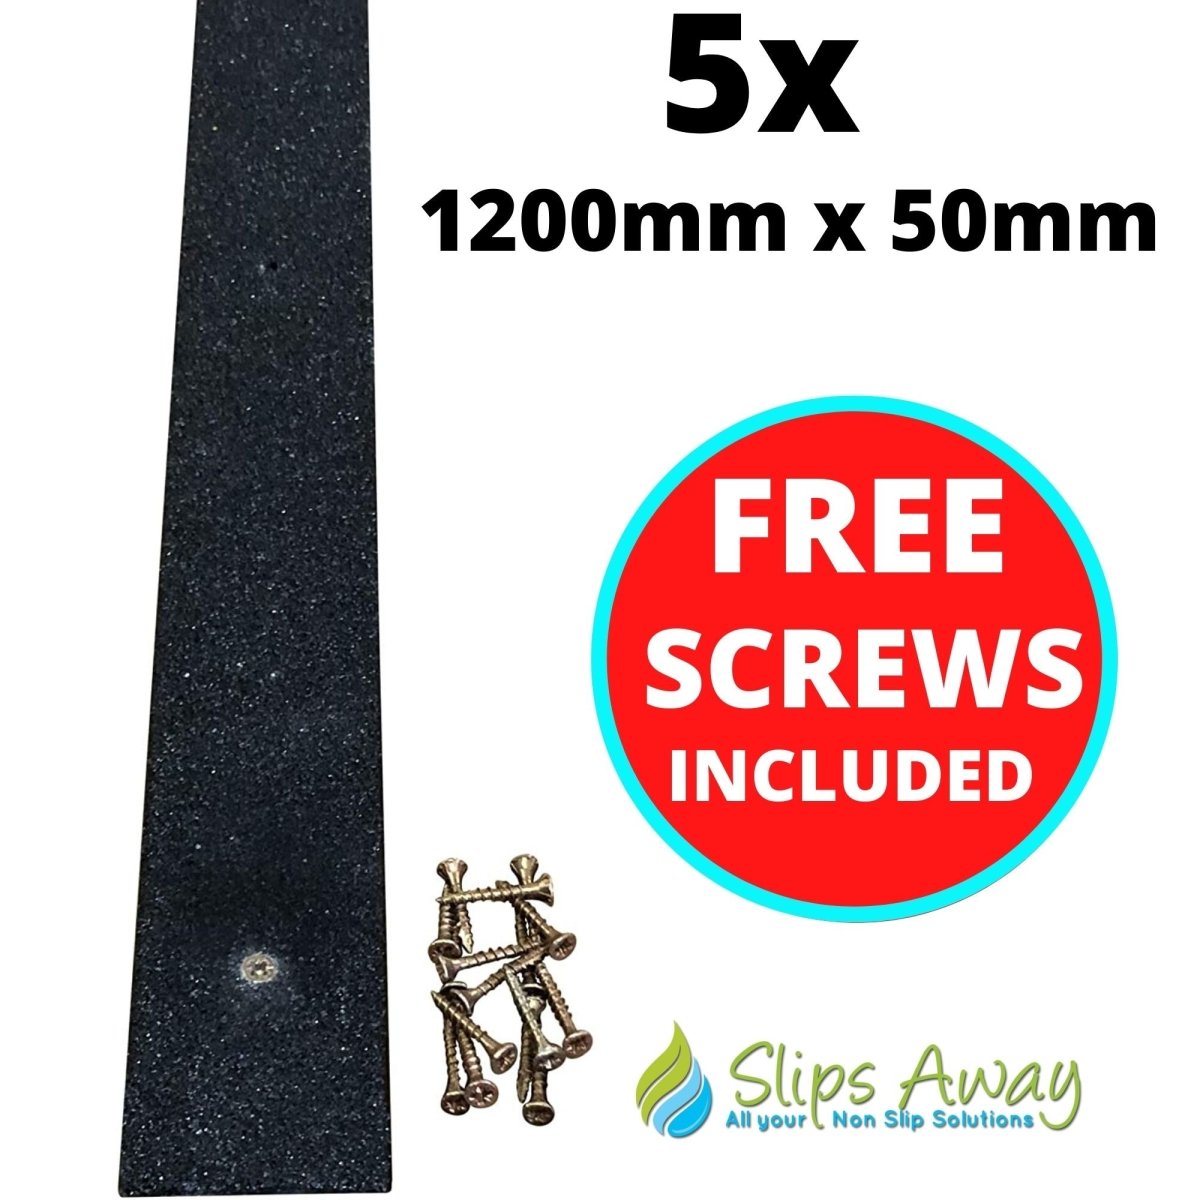 Black Non Slip Decking Strips - Slips Away - decking strip black 1200mm x 50mm 5x pack -